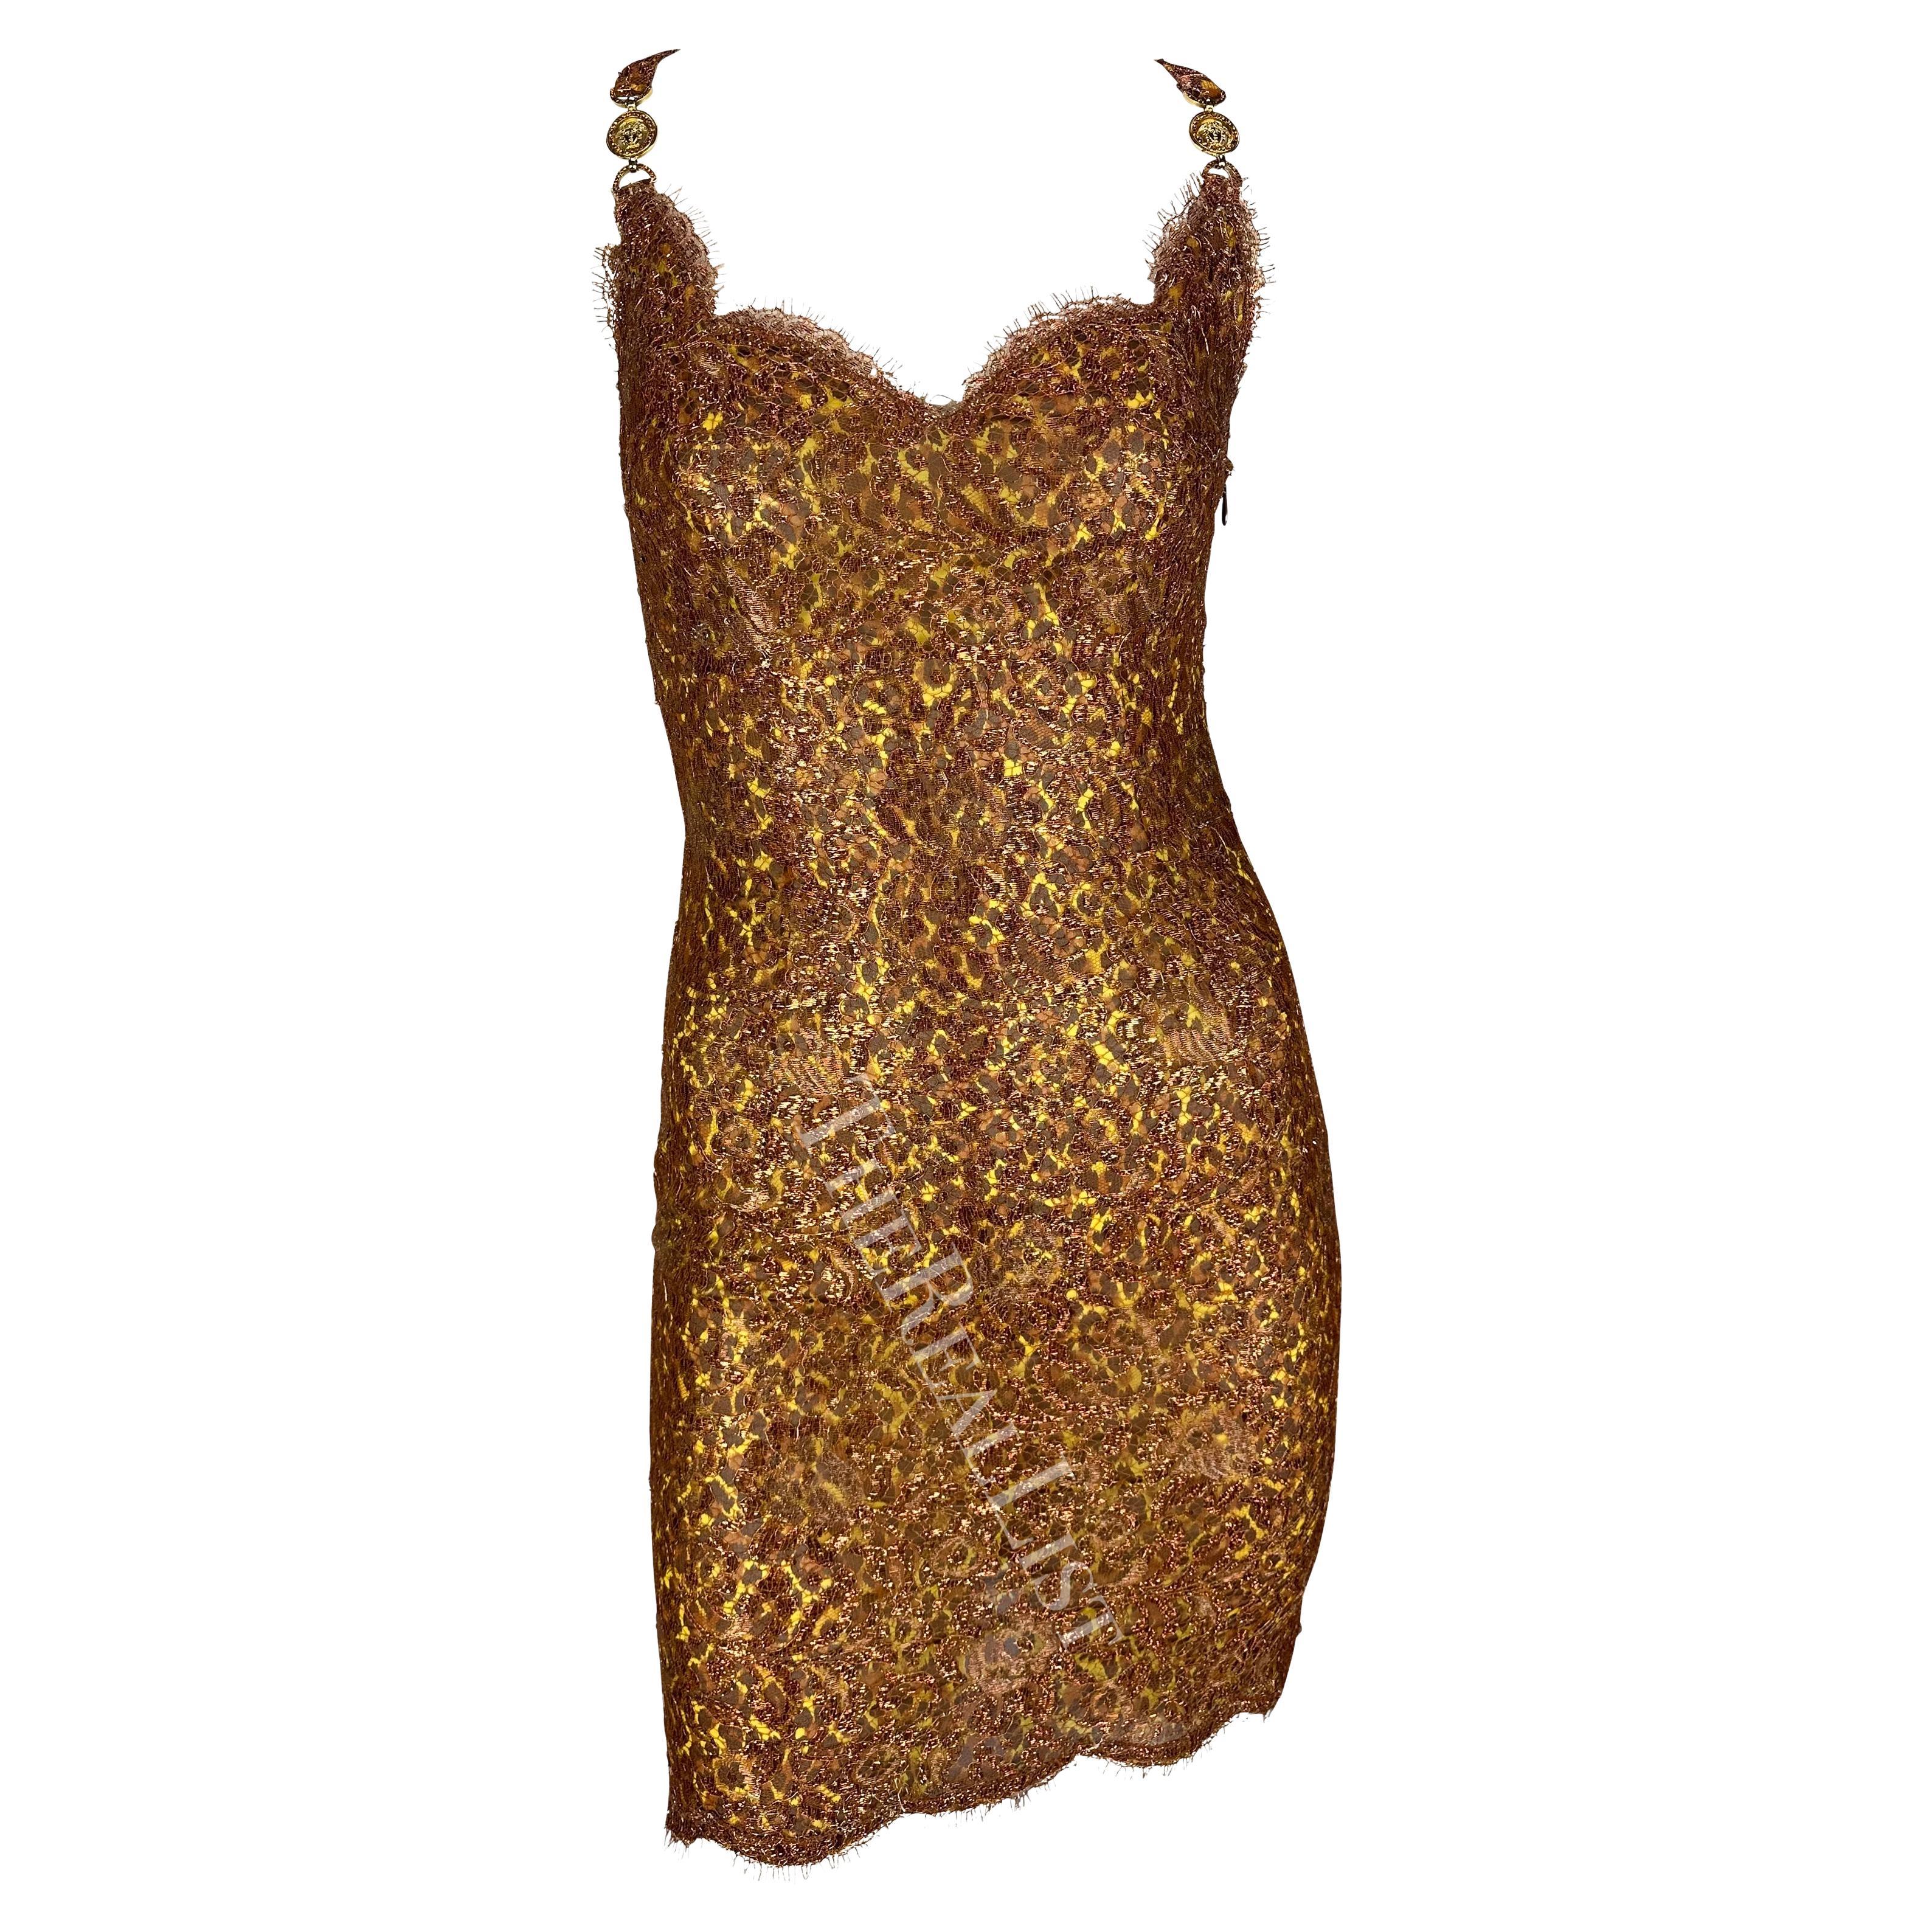 S/S 1996 Atelier Versace Haute Couture Copper Lace Cheetah Rhinestone Mini Dress For Sale